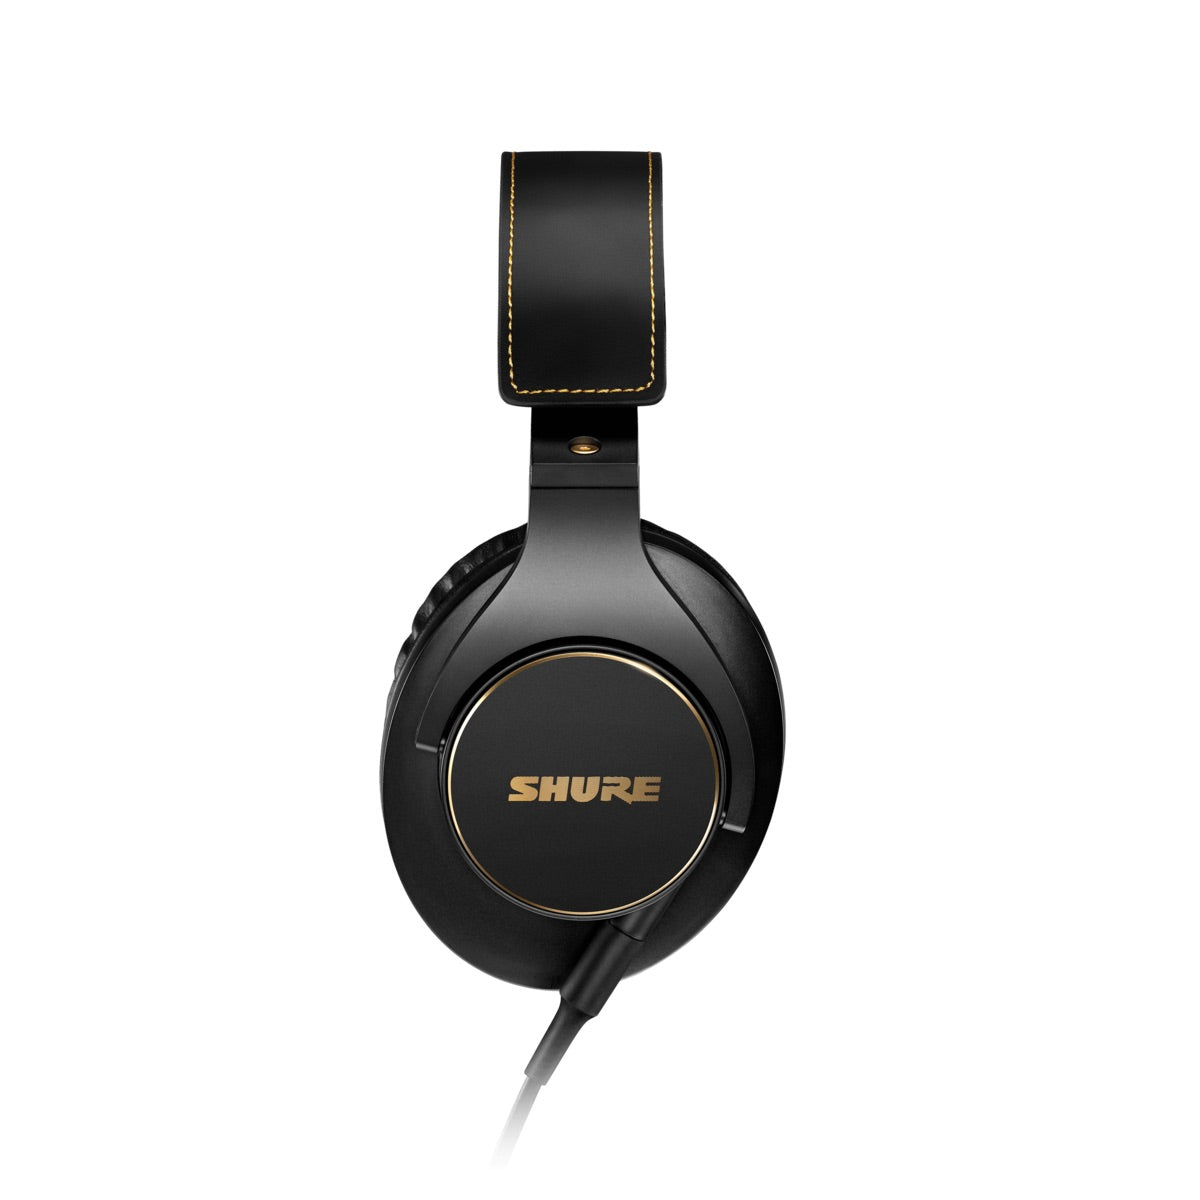 Shure SRH840A - Professional Monitoring Headphones, left side